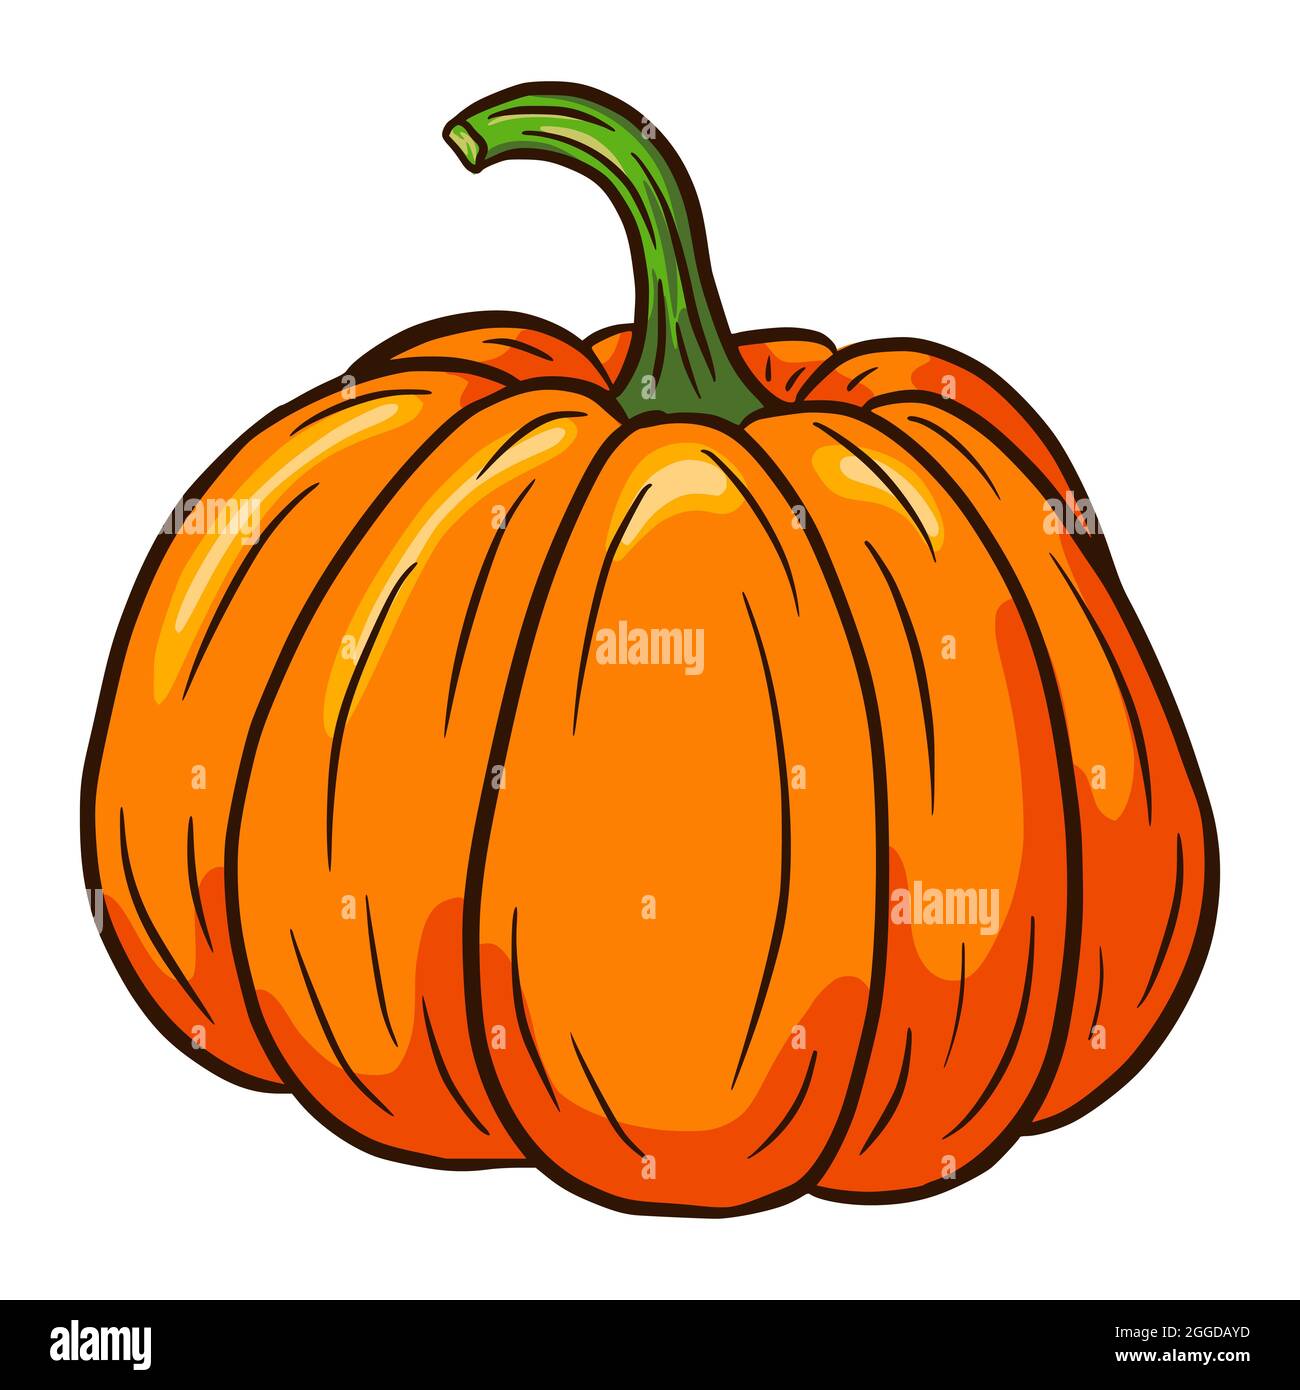 Sugar Pumpkin Illustration. Autumn Food Icon. Ripe squash sketch. Element for autumn decorative design, halloween invitation, harvest, sticker, print, logo, menu, recipe Stock Vector